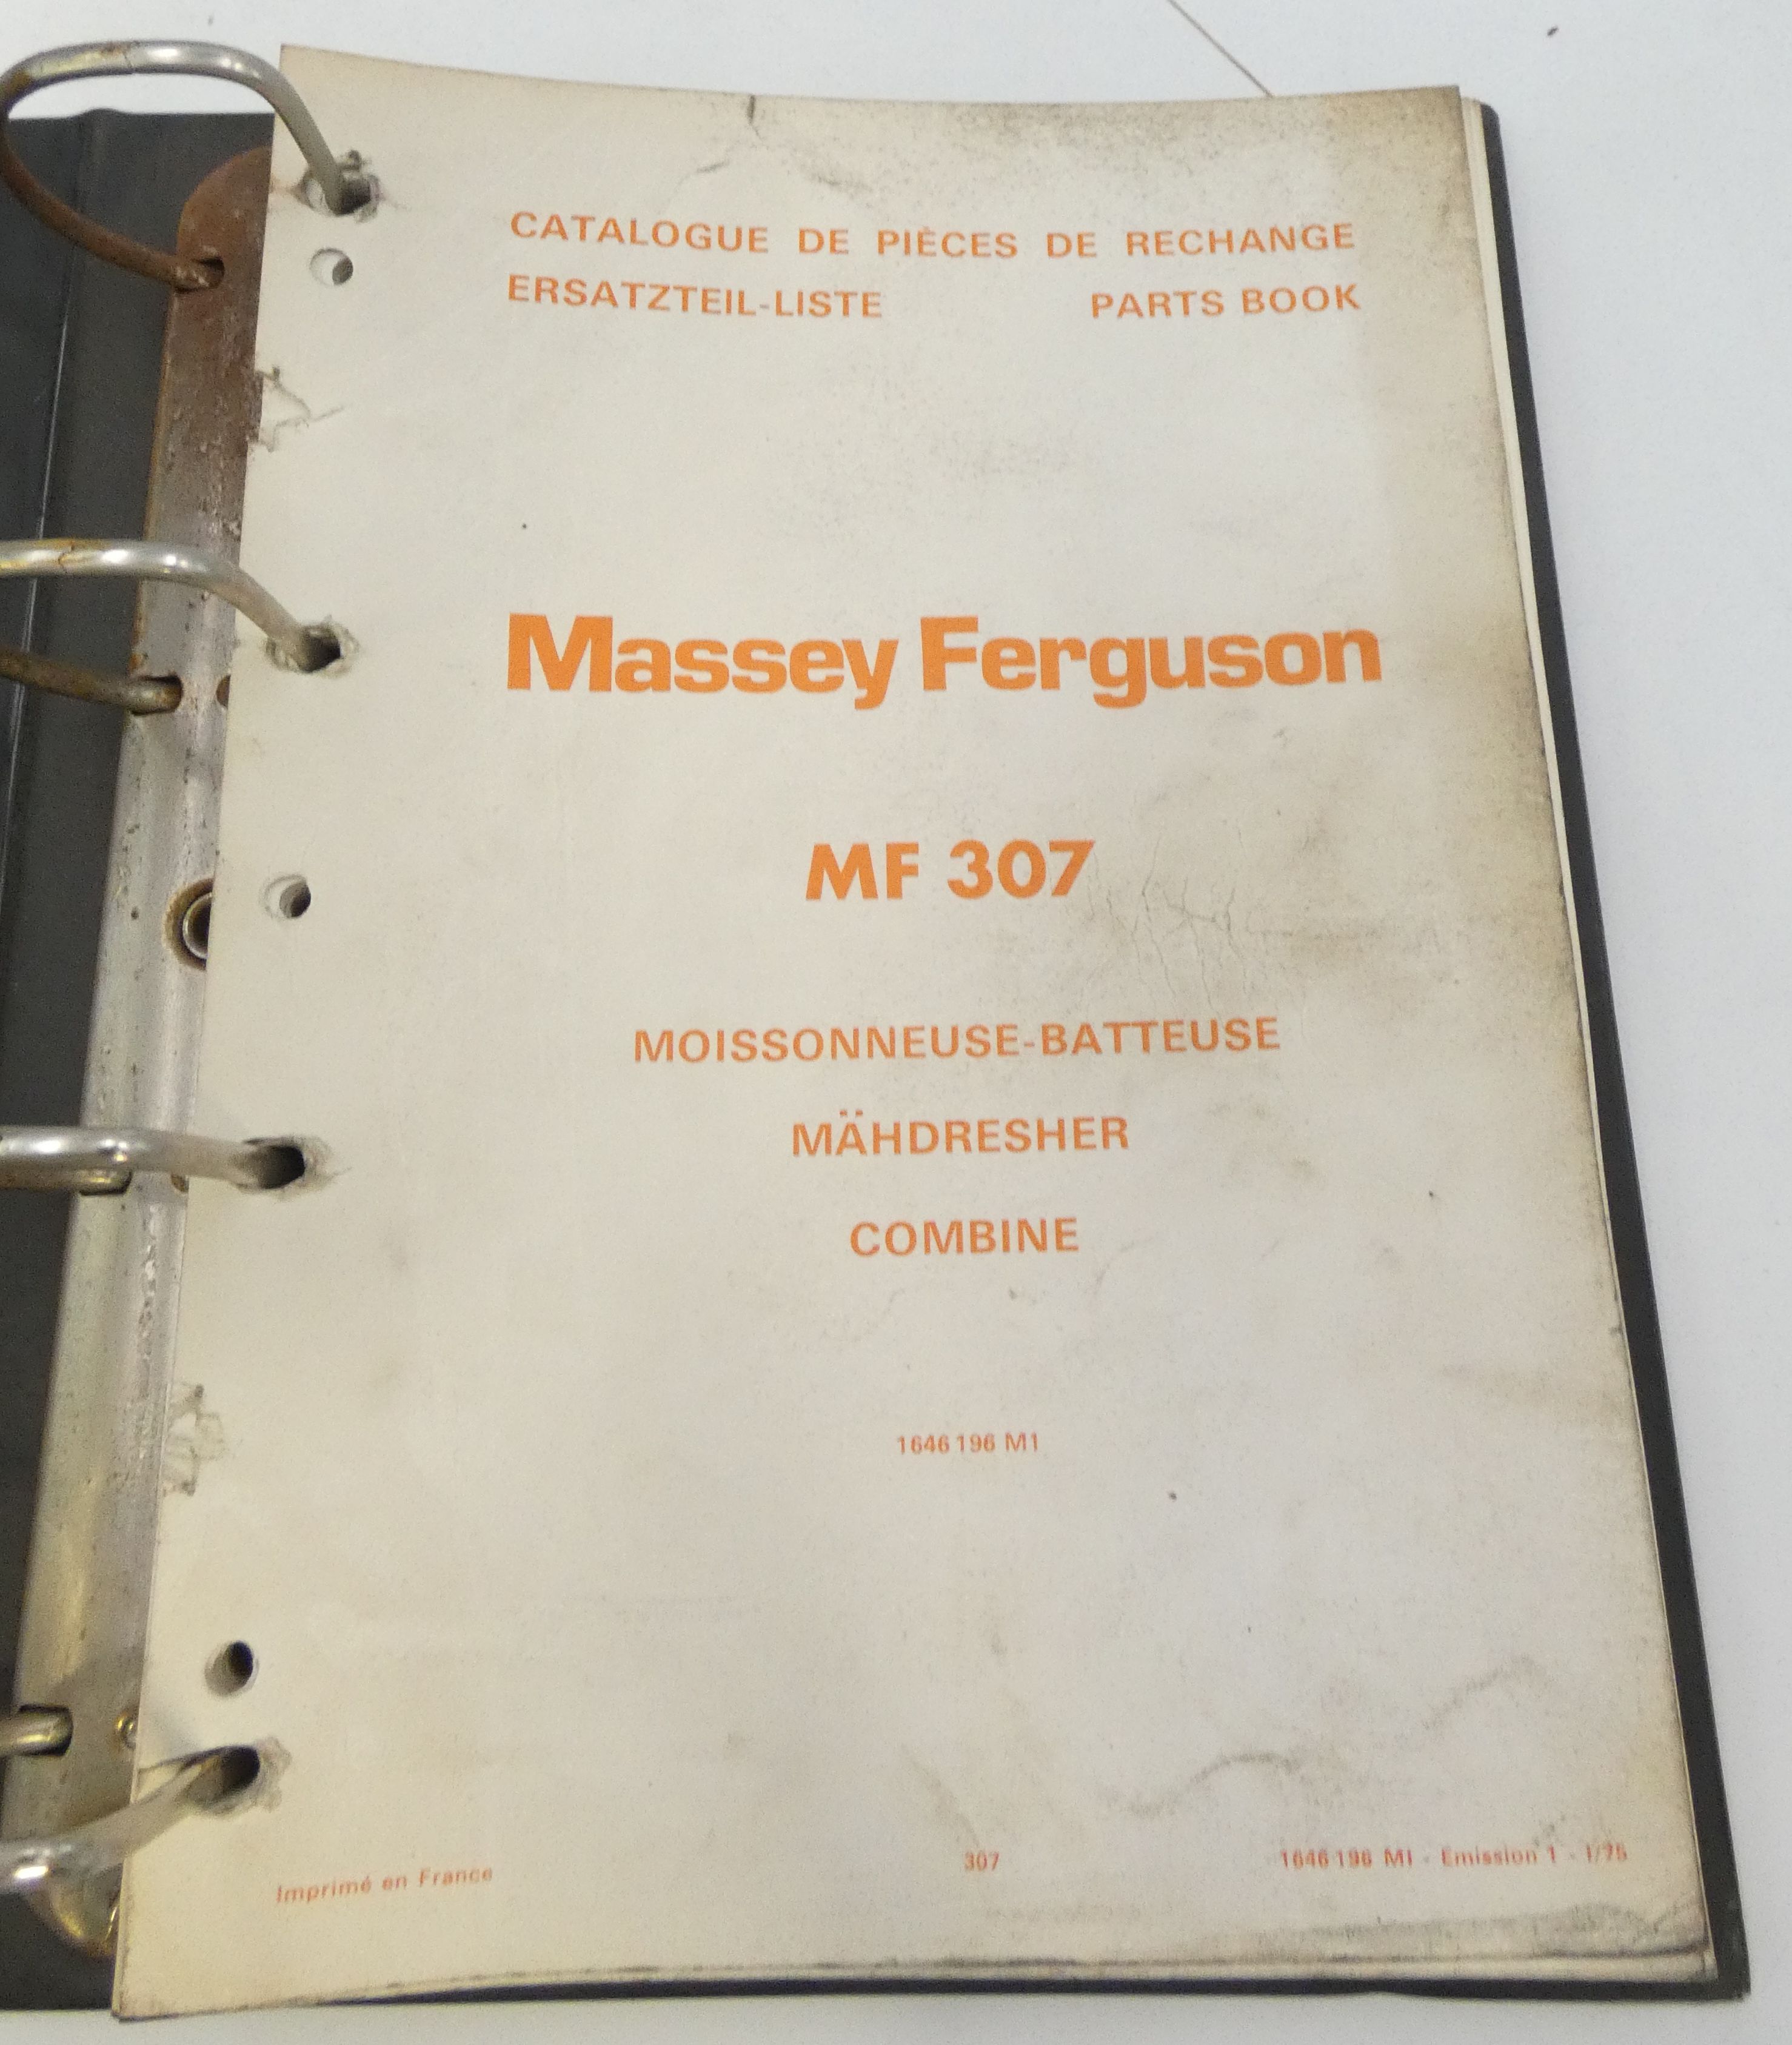 Massey Ferguson MF307 combine parts book